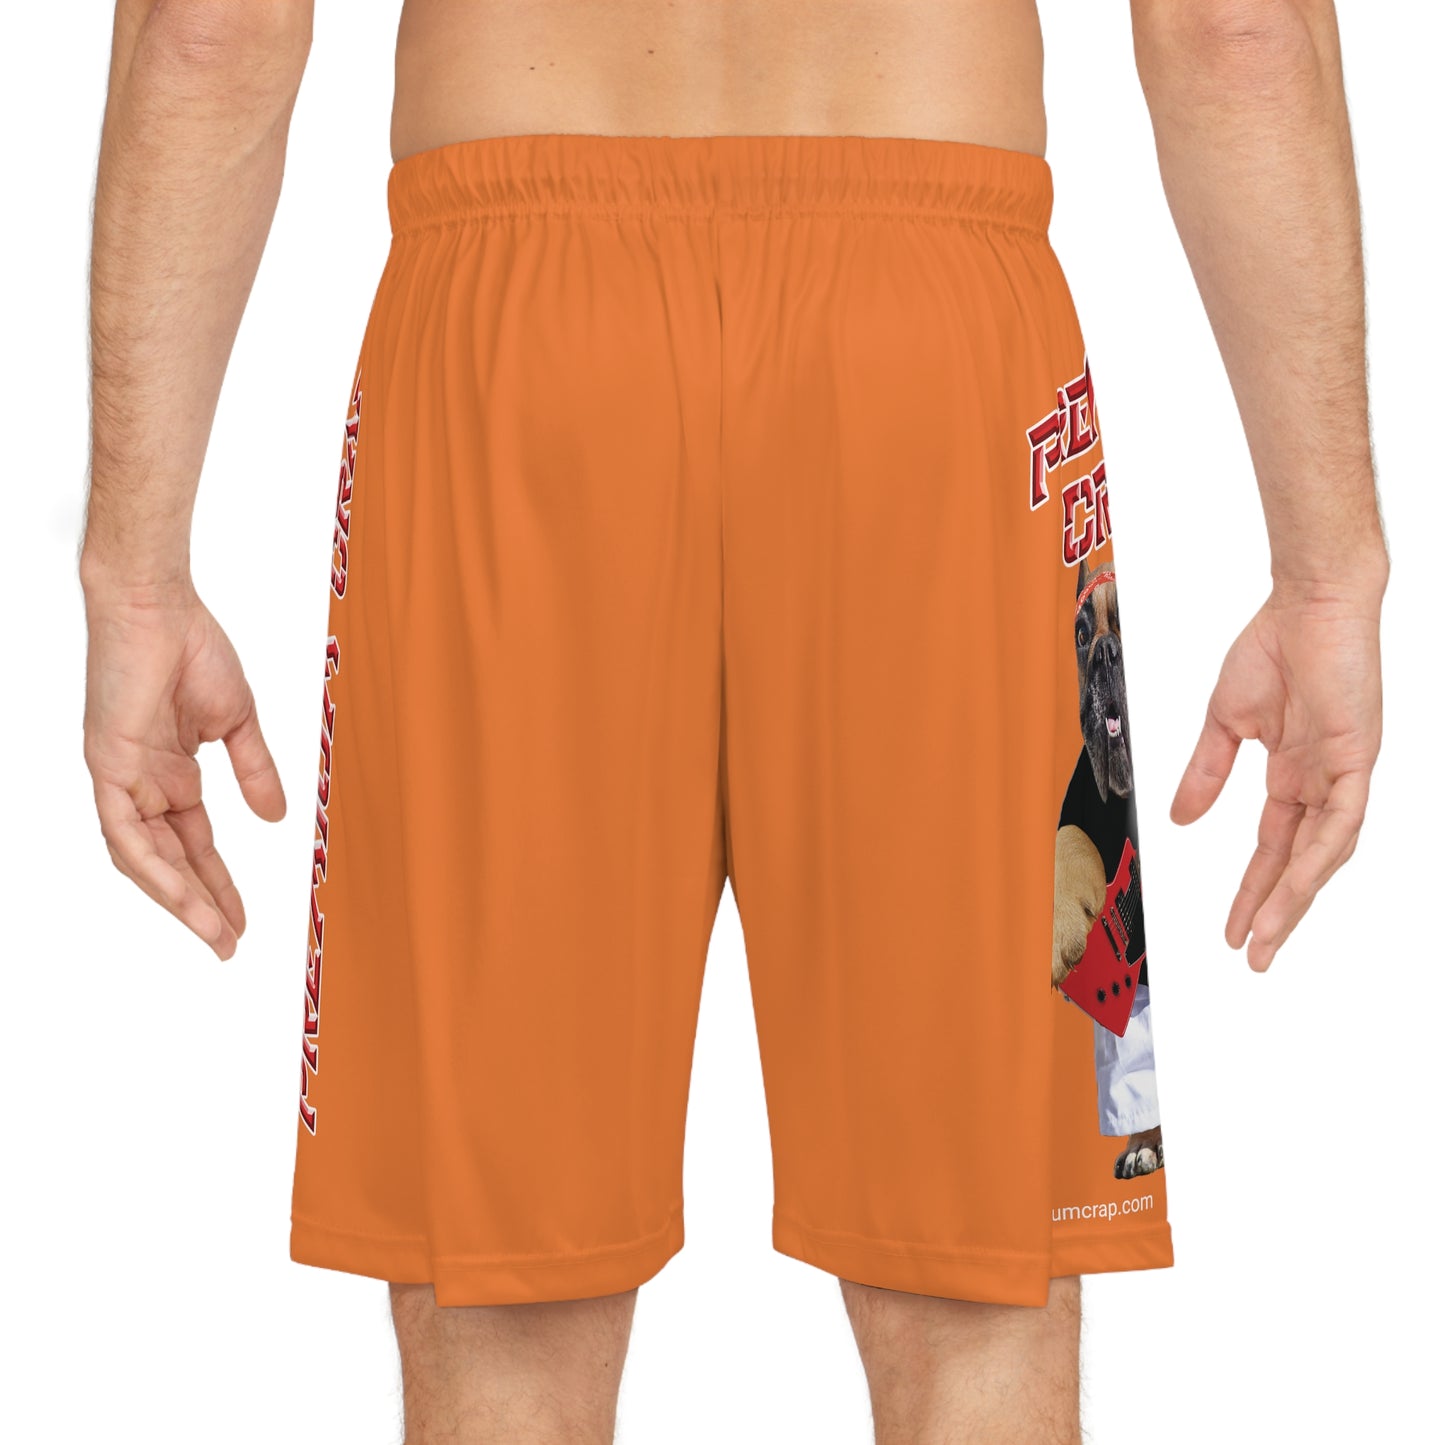 Premium Crap Basketball Shorts - Crusta